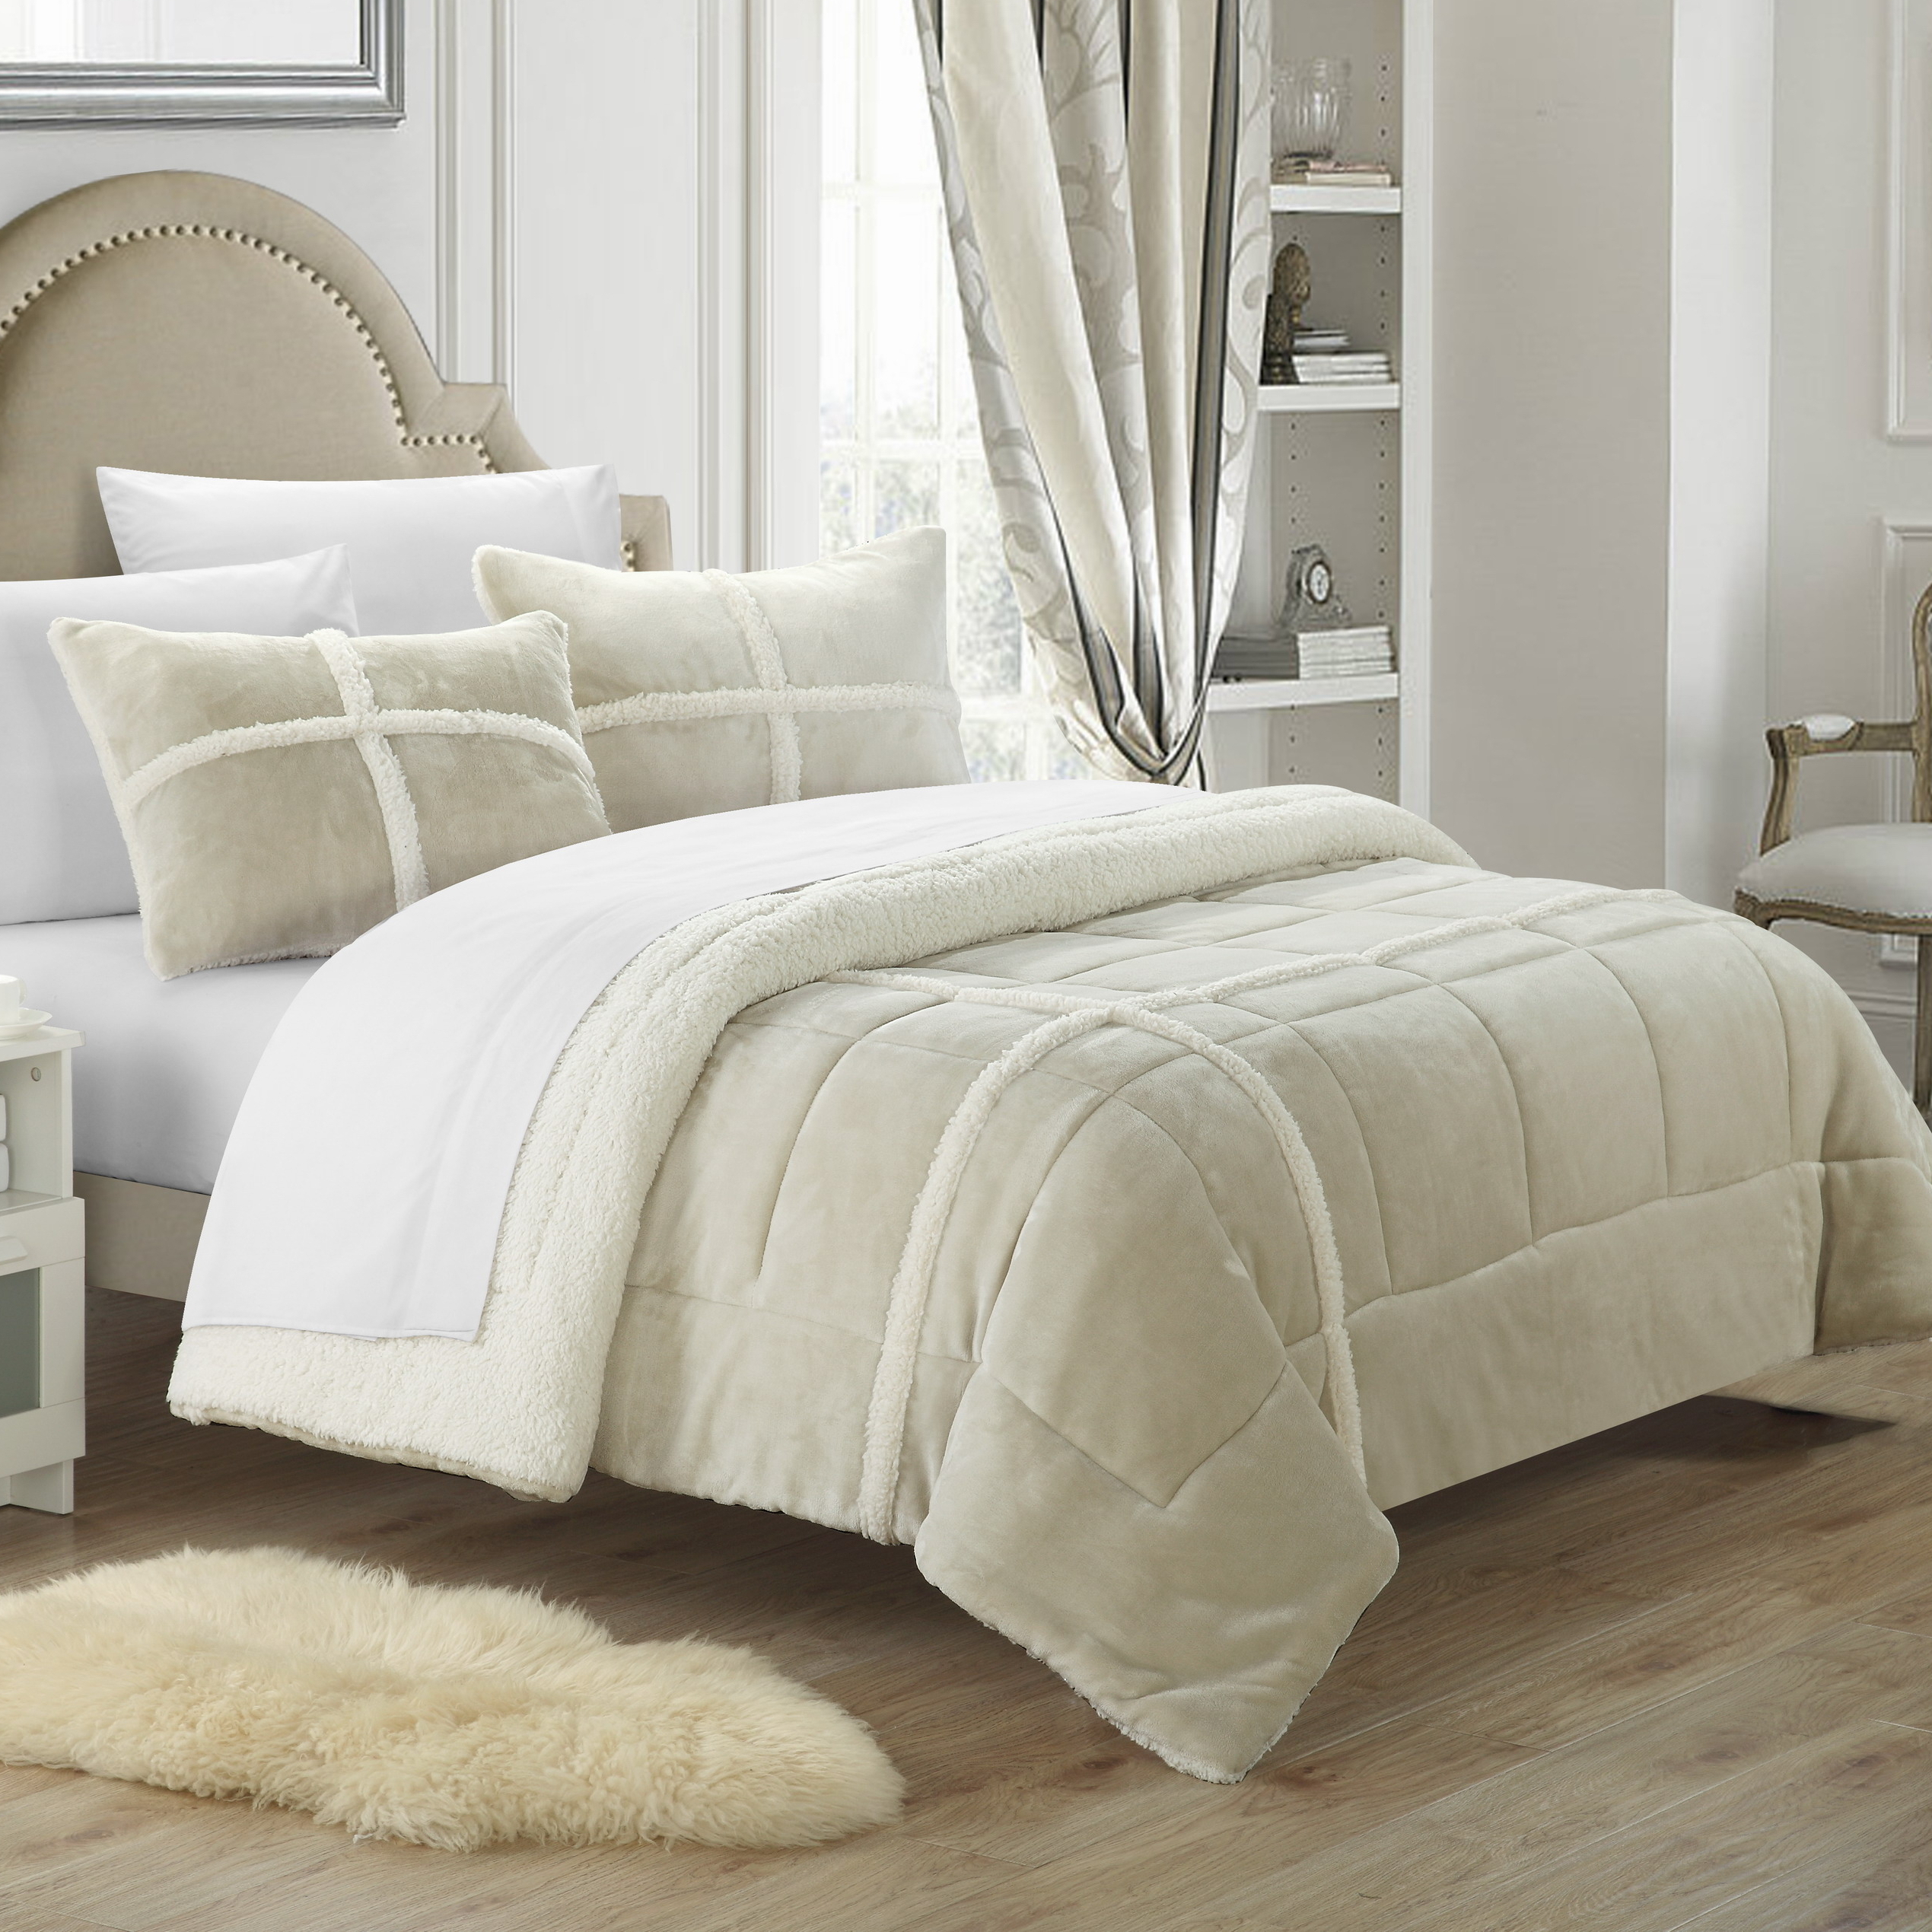 Chloe 3 Or 2 Piece Comforter Set Ultra Plush Micro Mink Sherpa Lined Bedding â Decorative Pillow Shams Included - Camel, King - 3 Piece